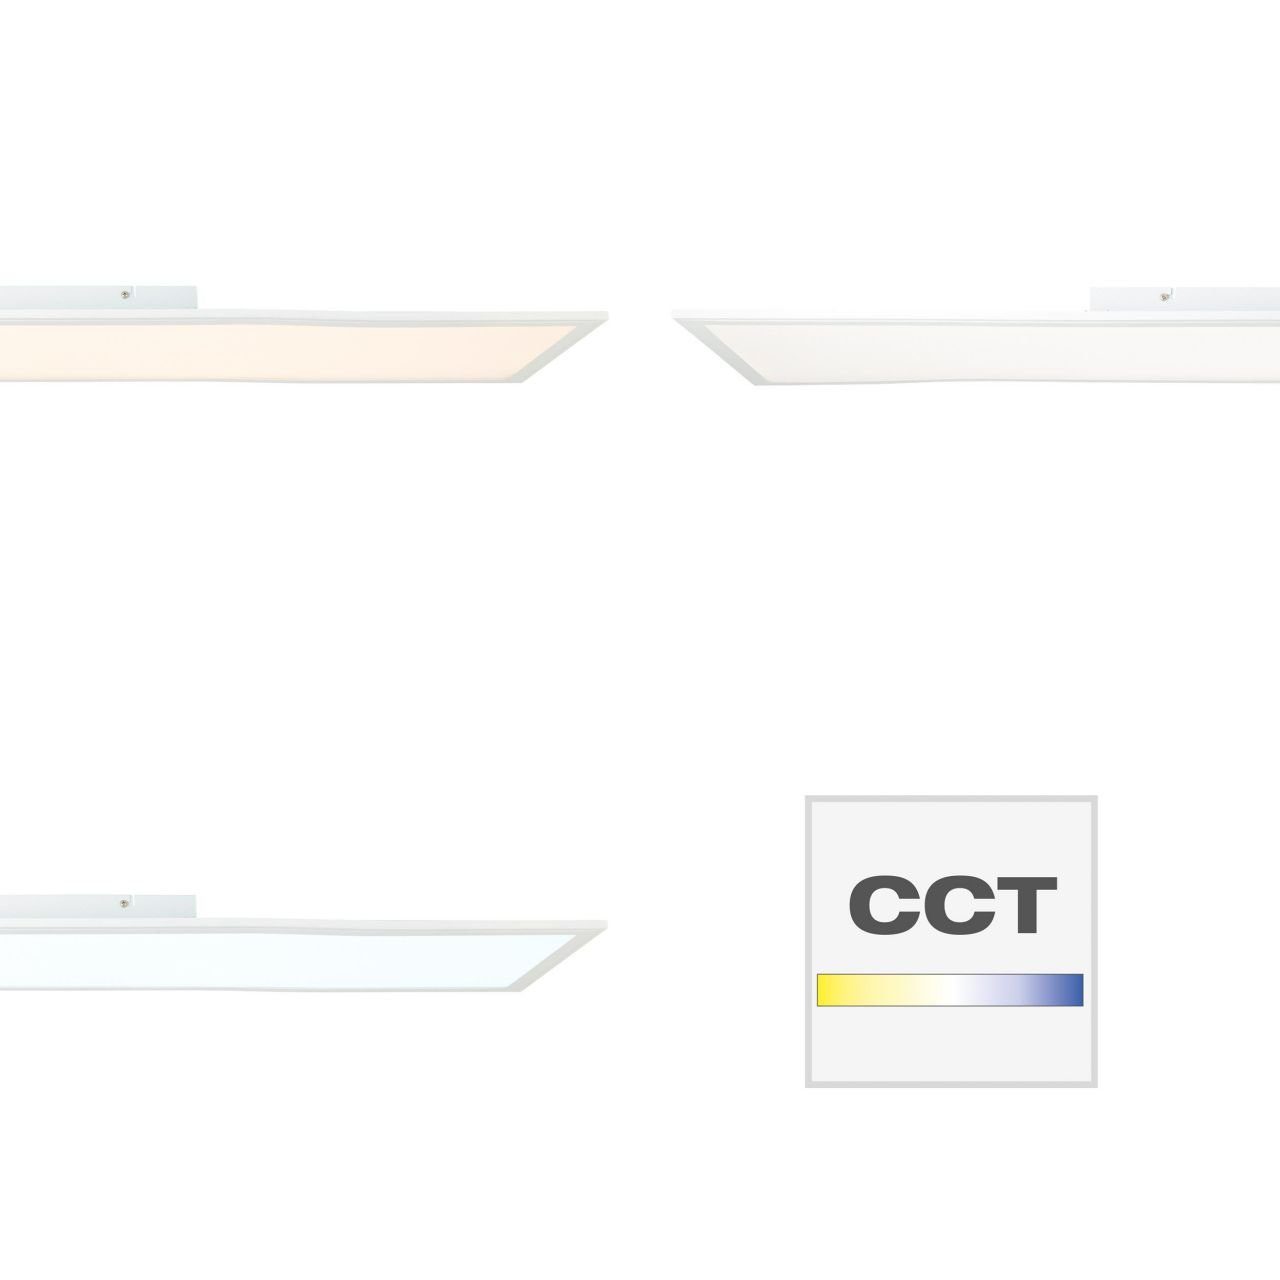 Fernbedienung, Panel dimmbar, integriert, 120 3800 CCT, RGB, Brilliant LED Abie, x Farbwechsler, 30 fest lm, LED weiß cm,